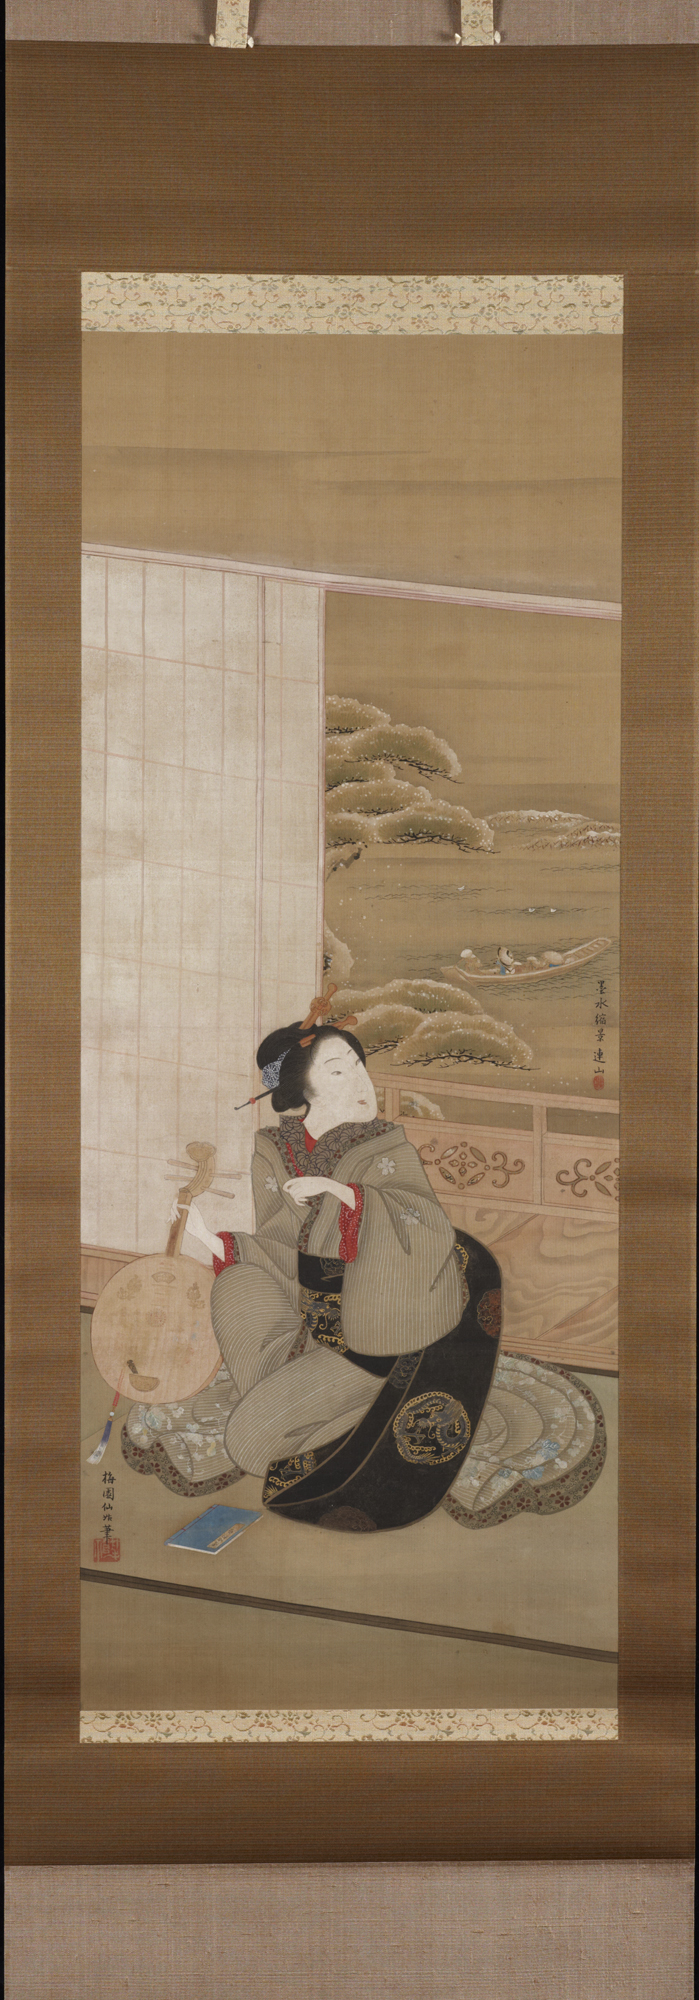 Japanese, Edo period, 1600–1868, Hirai Renzan, 1798–1886 and Nagahara Baien, 1823?–1898: View of the Sumida River, ca. 1850s. (2012-59).